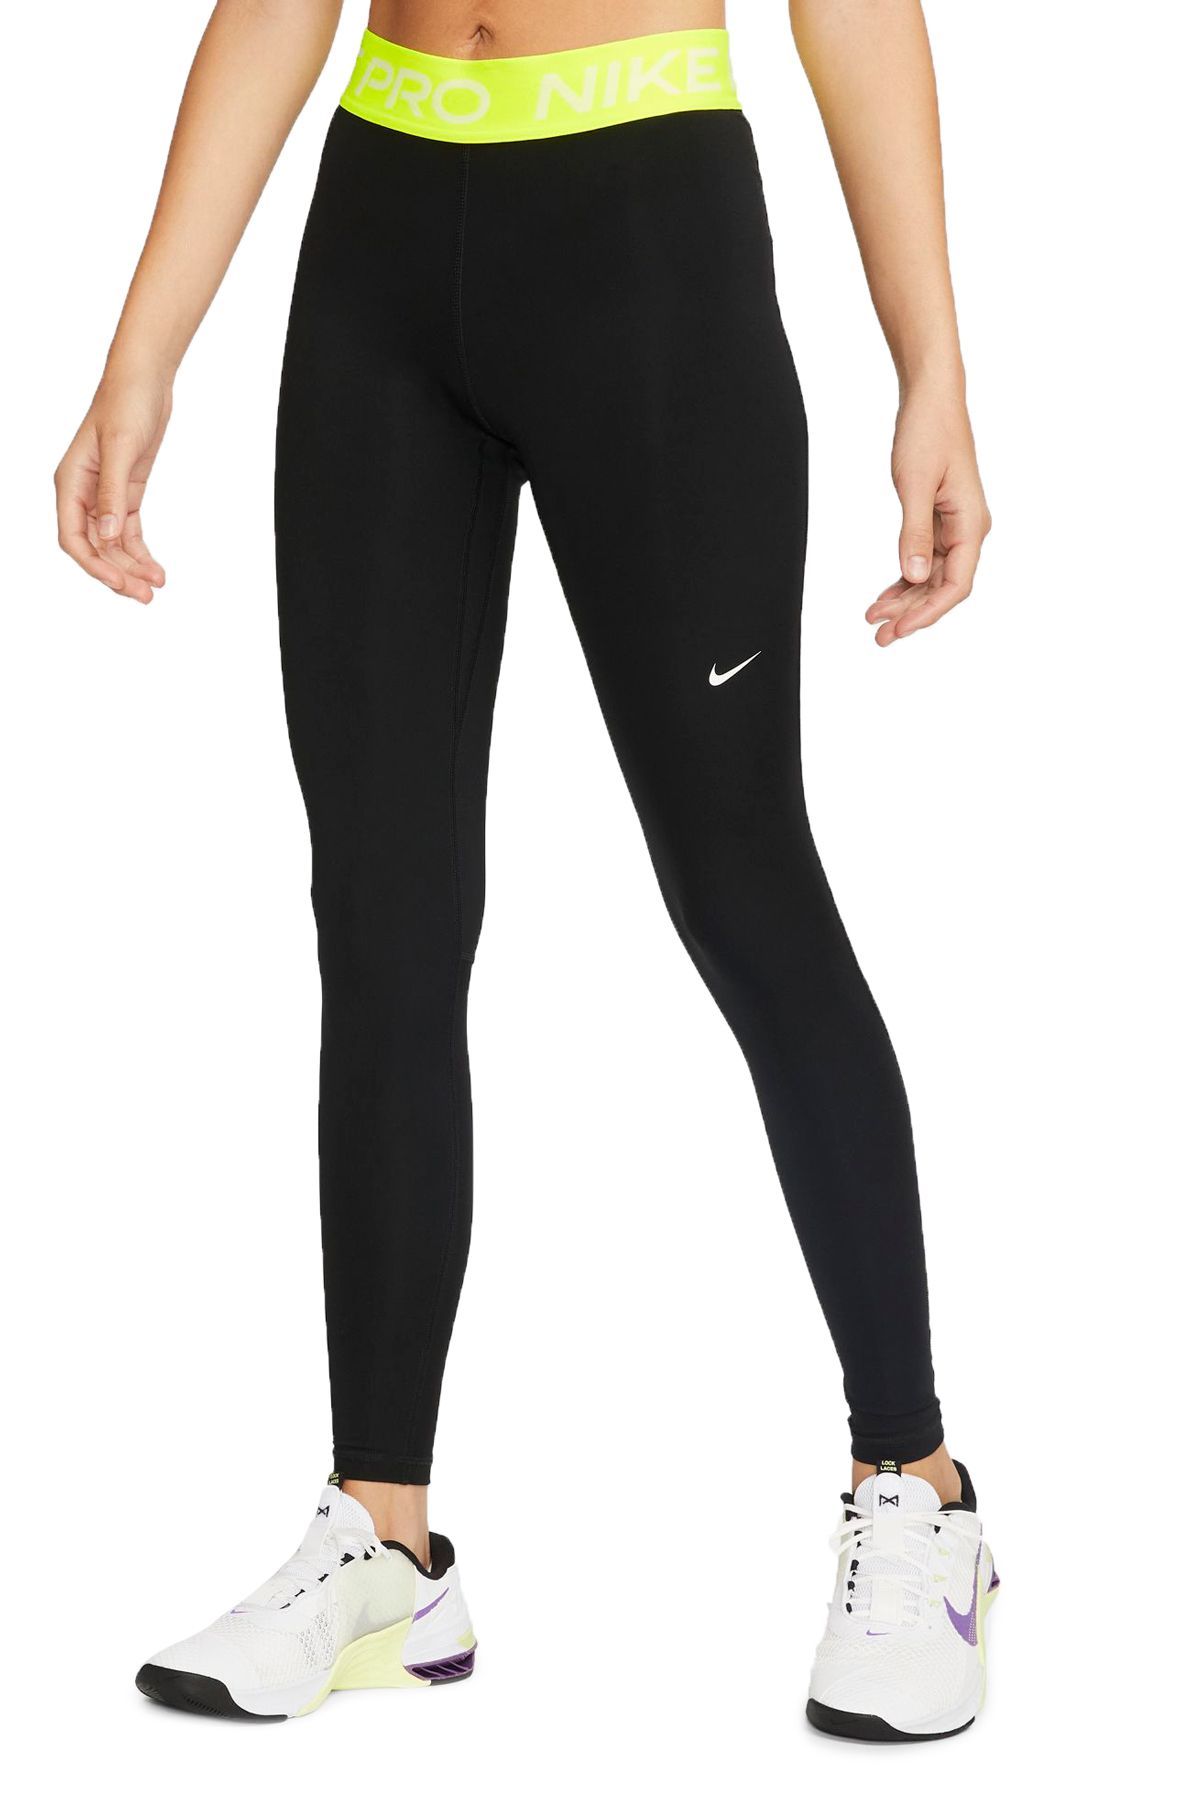 Nike Women's 3 Pro Training Shorts - Black / Volt / White